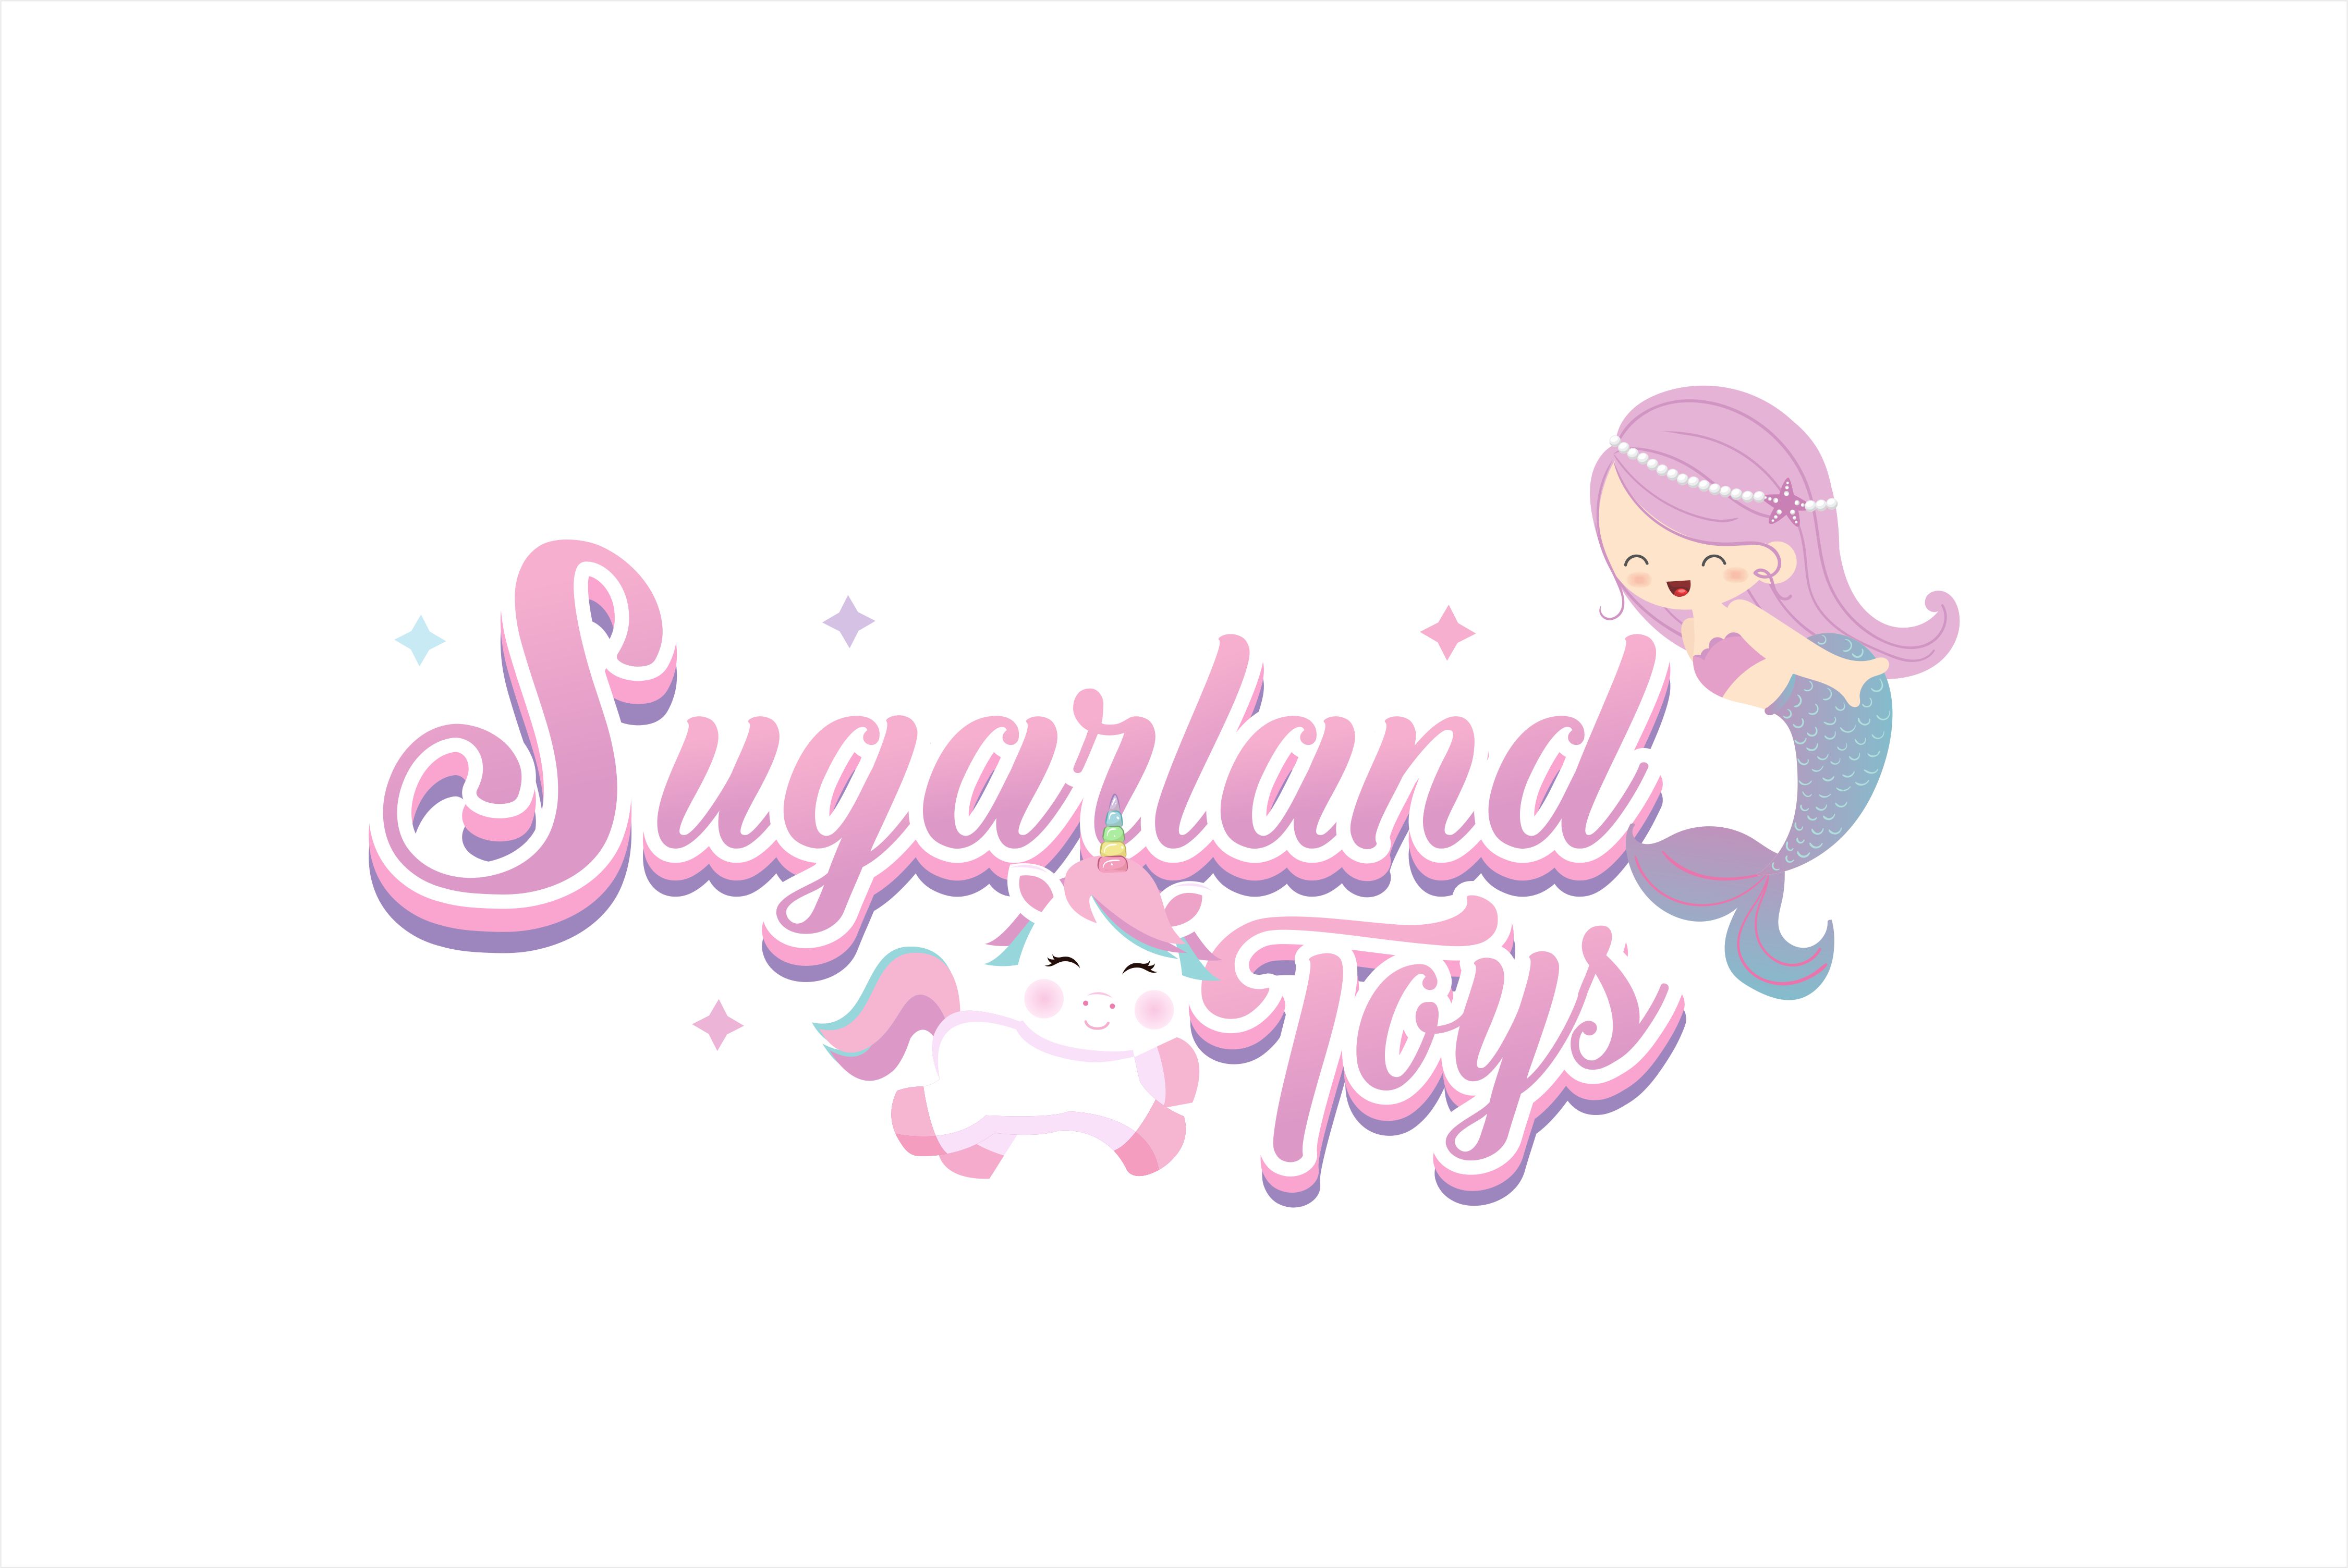 Sugarland Toys